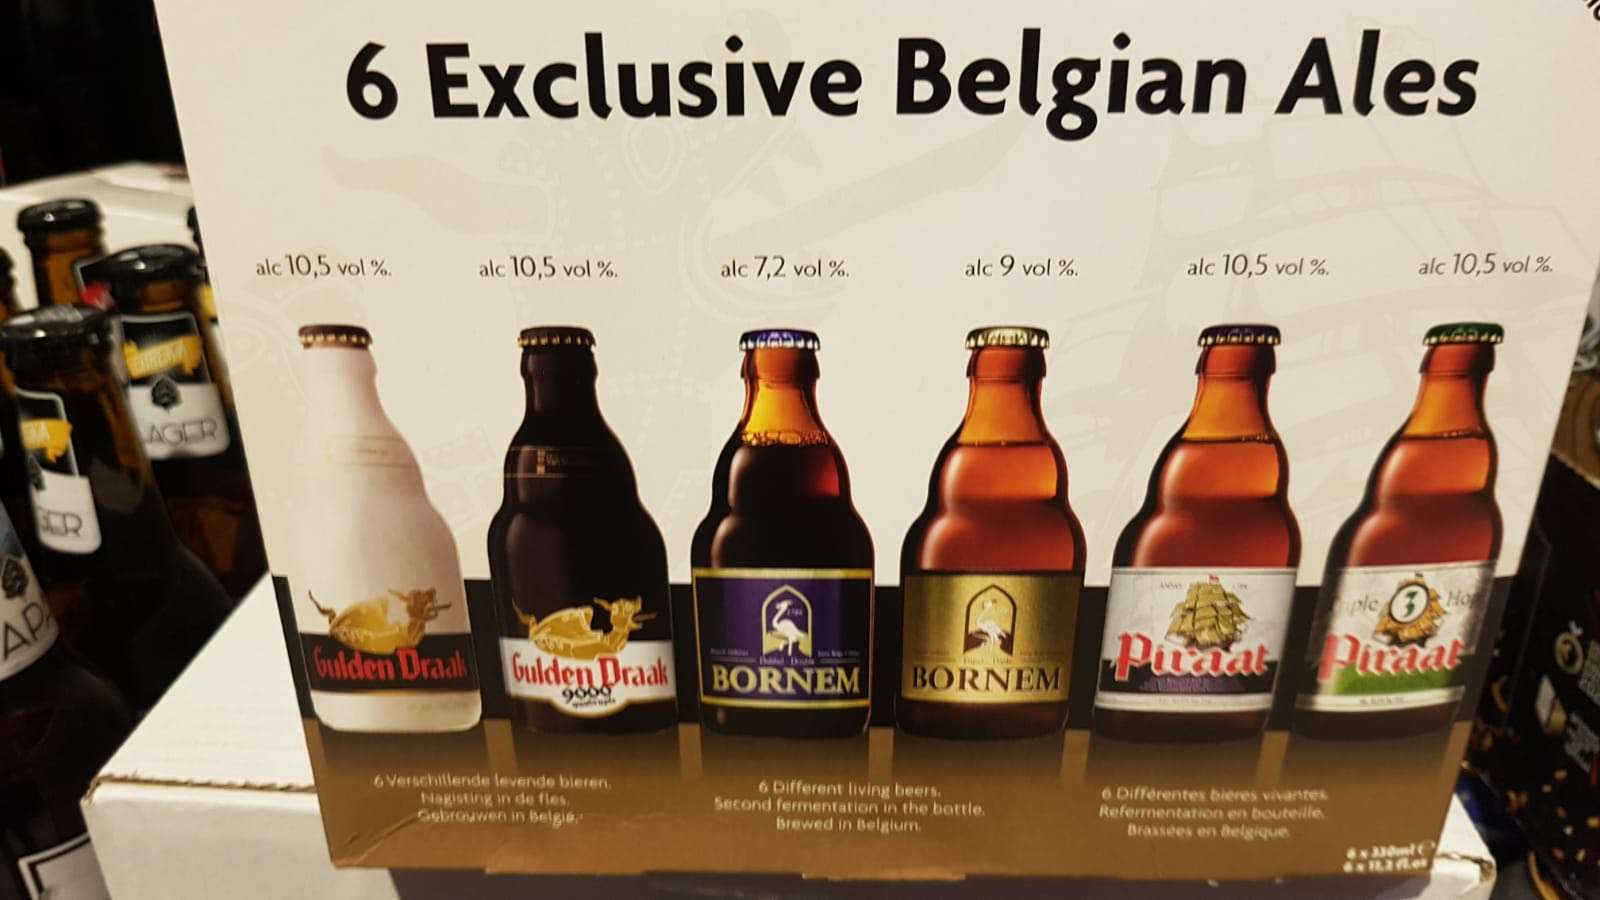 Malawi Expectativa diluido Cerveza Belgian ales Lidl (Gulden draak,bornem,piraat) » Chollometro